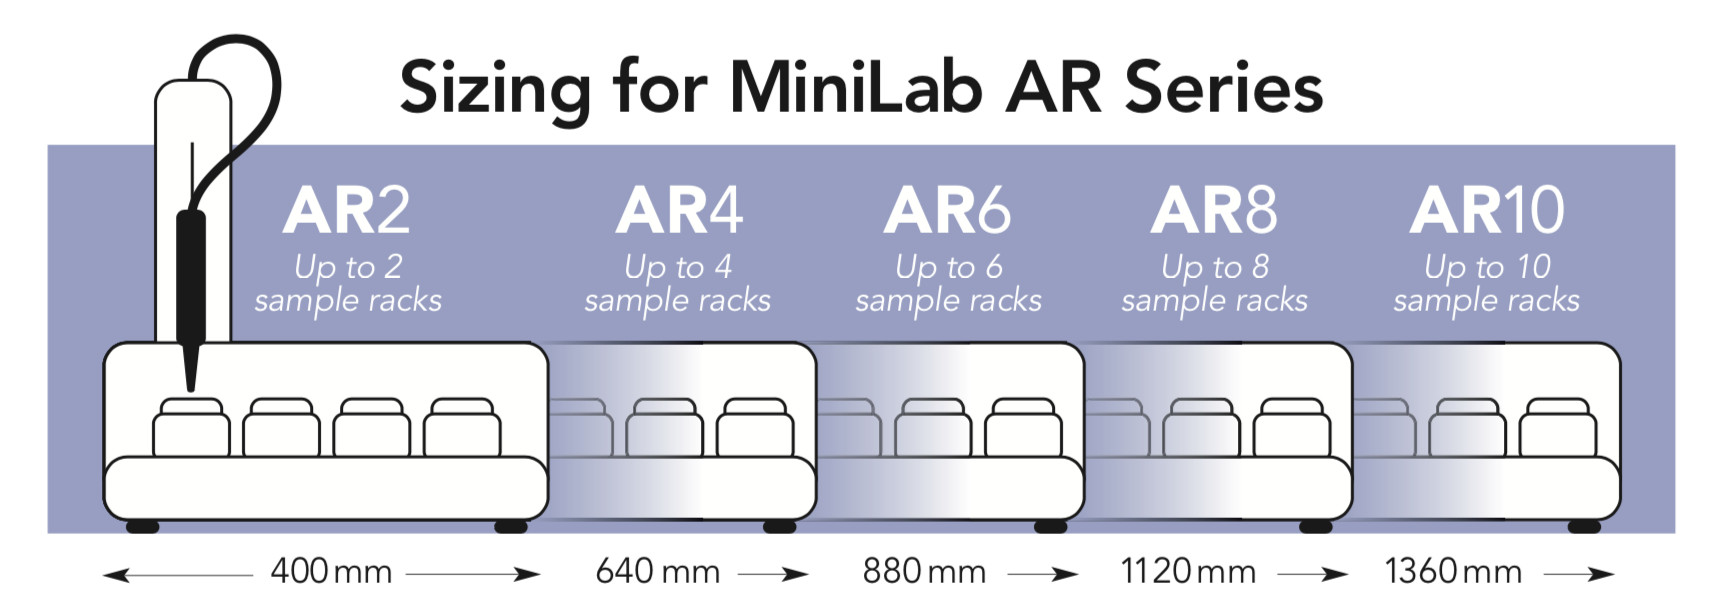 Sizing for Minilab AR & AP